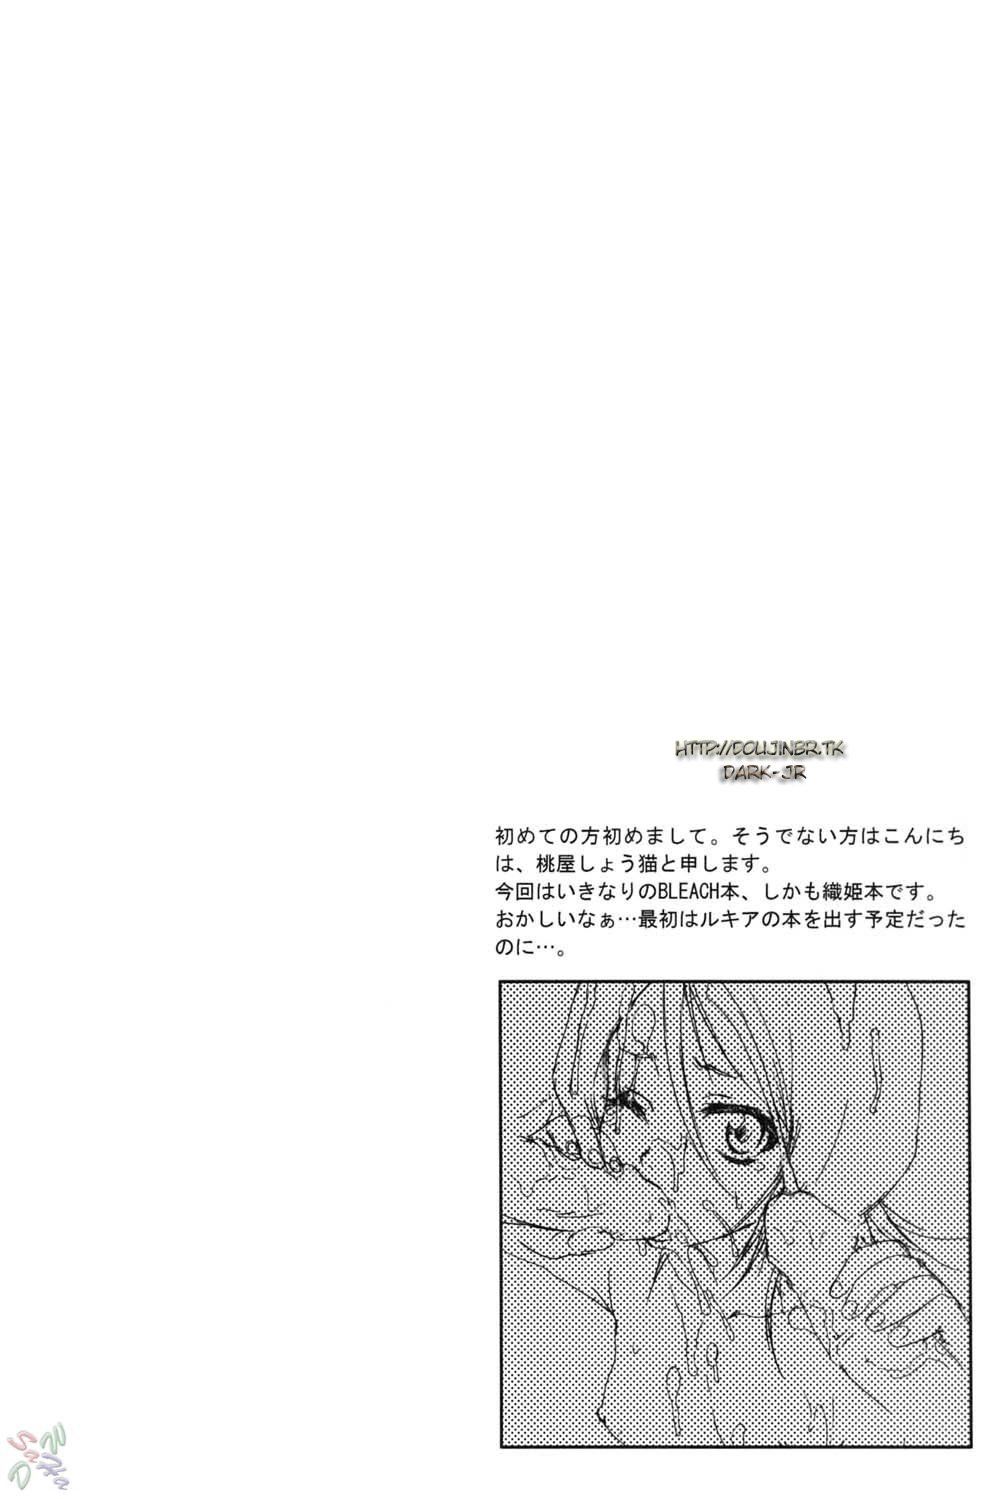 Hentaihome – Bleach – Orihime-chan de Go (3)